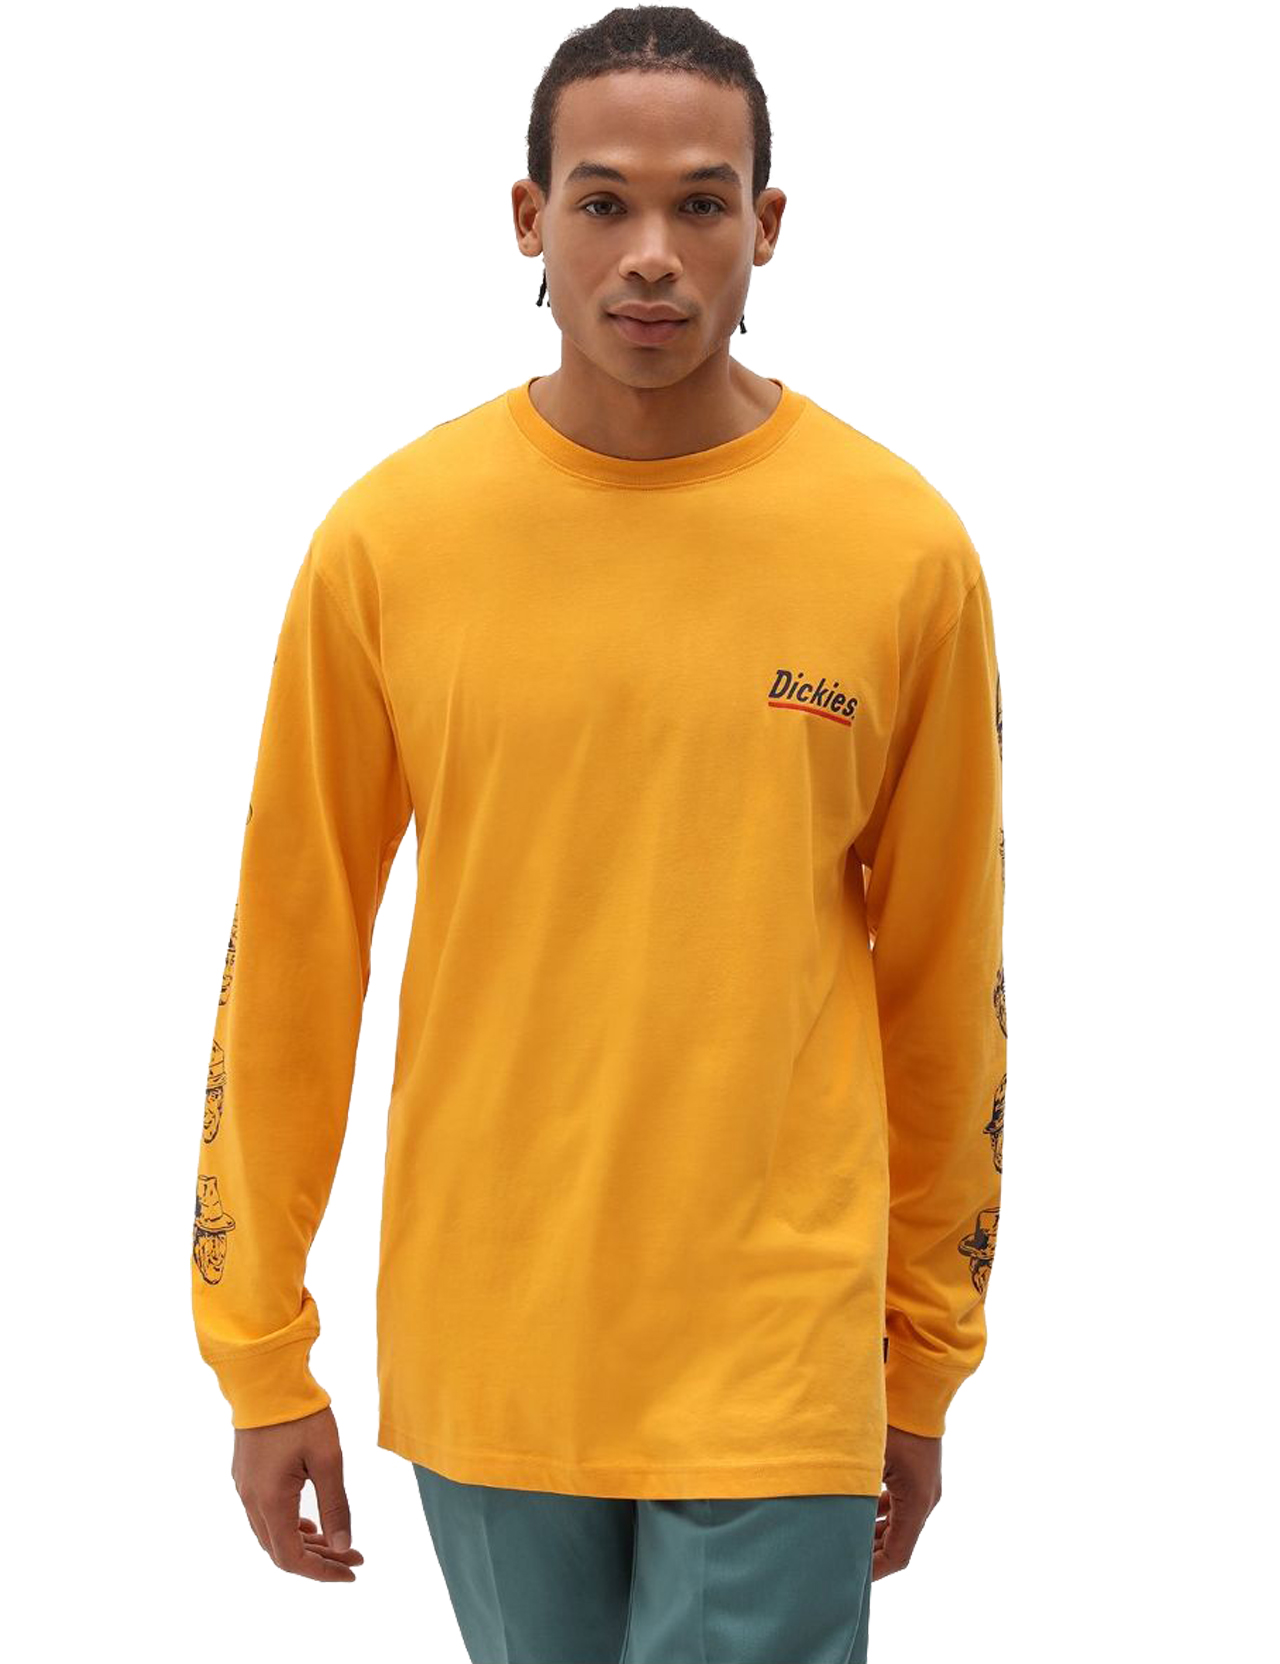 Dickies - Federal Dam Long Sleeve T-Shirt - Cadnium Yellow